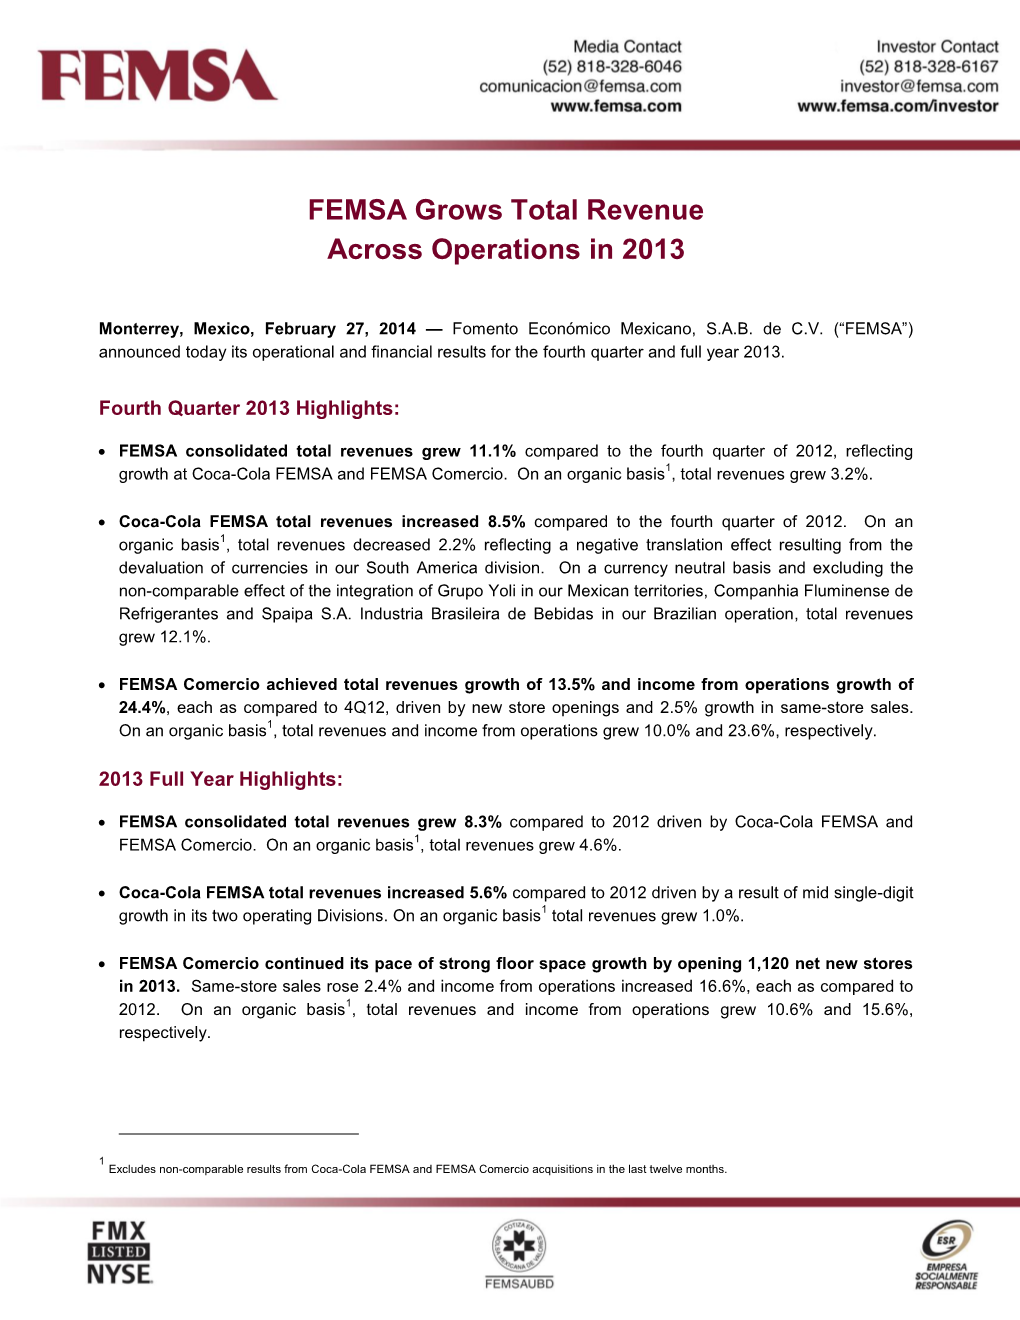 FEMSA Grows Total Revenue Across Operations in 2013